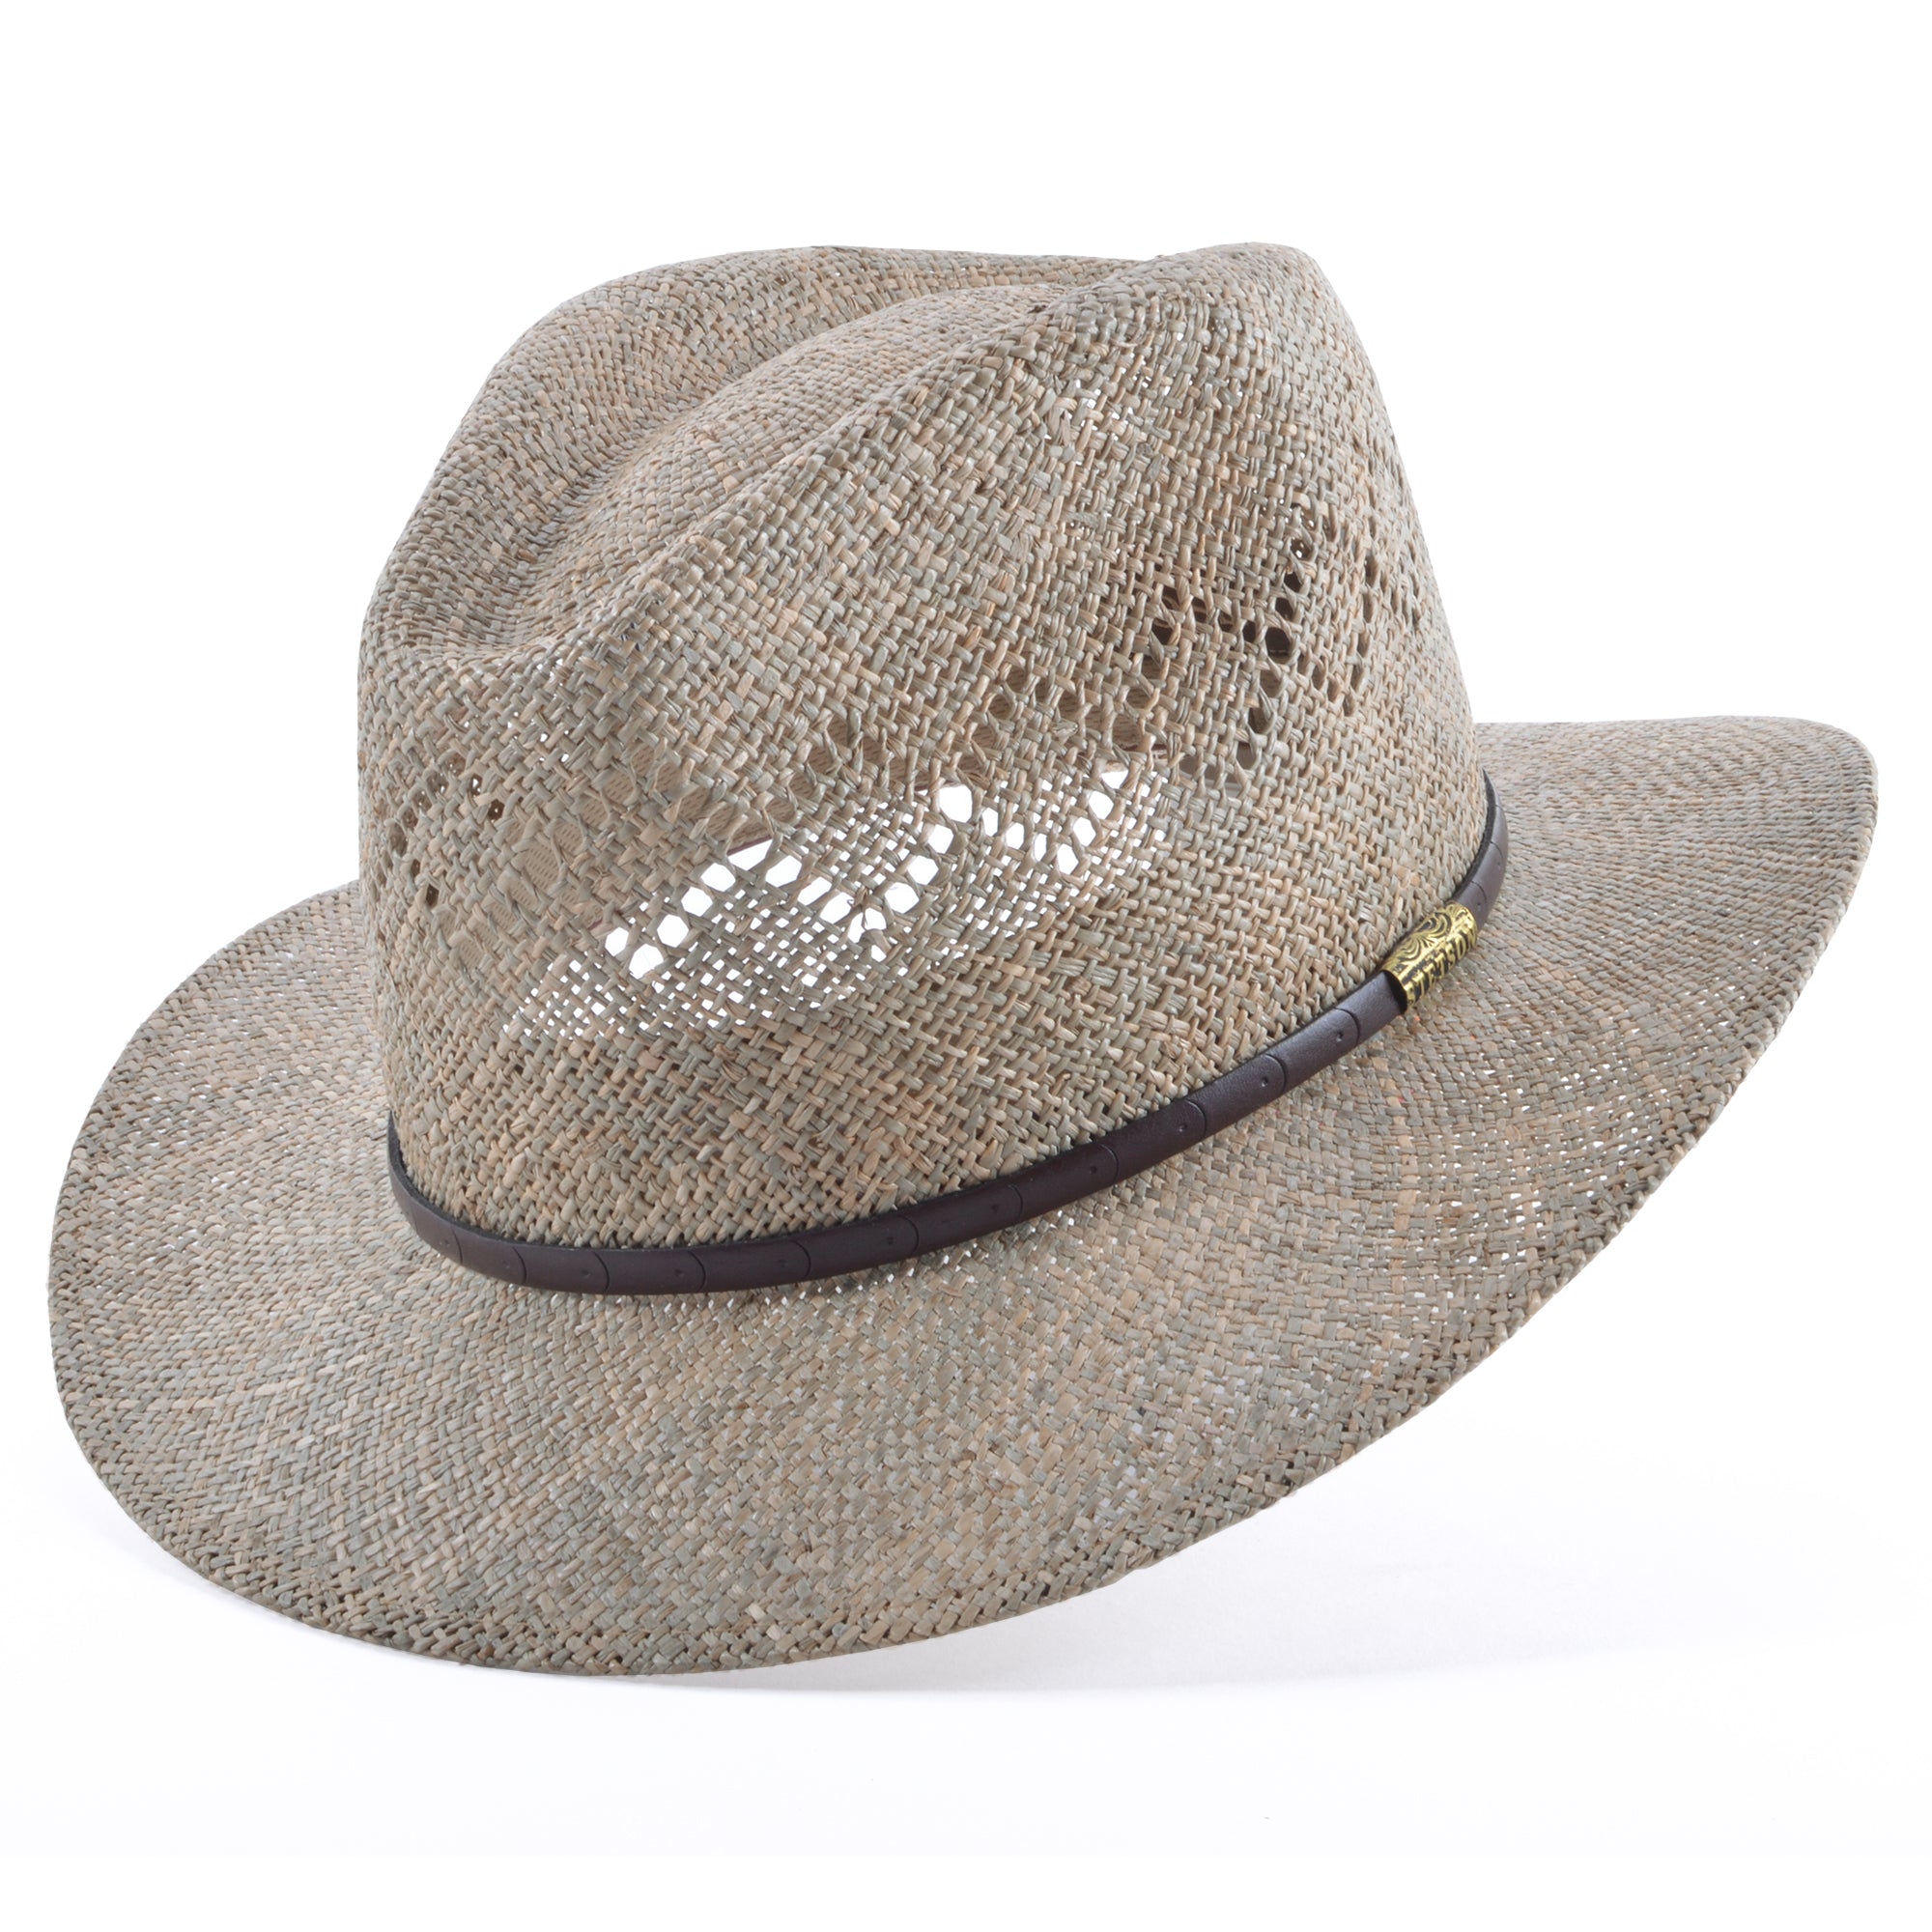 Stetson Creston Vented Seagrass Straw Hat